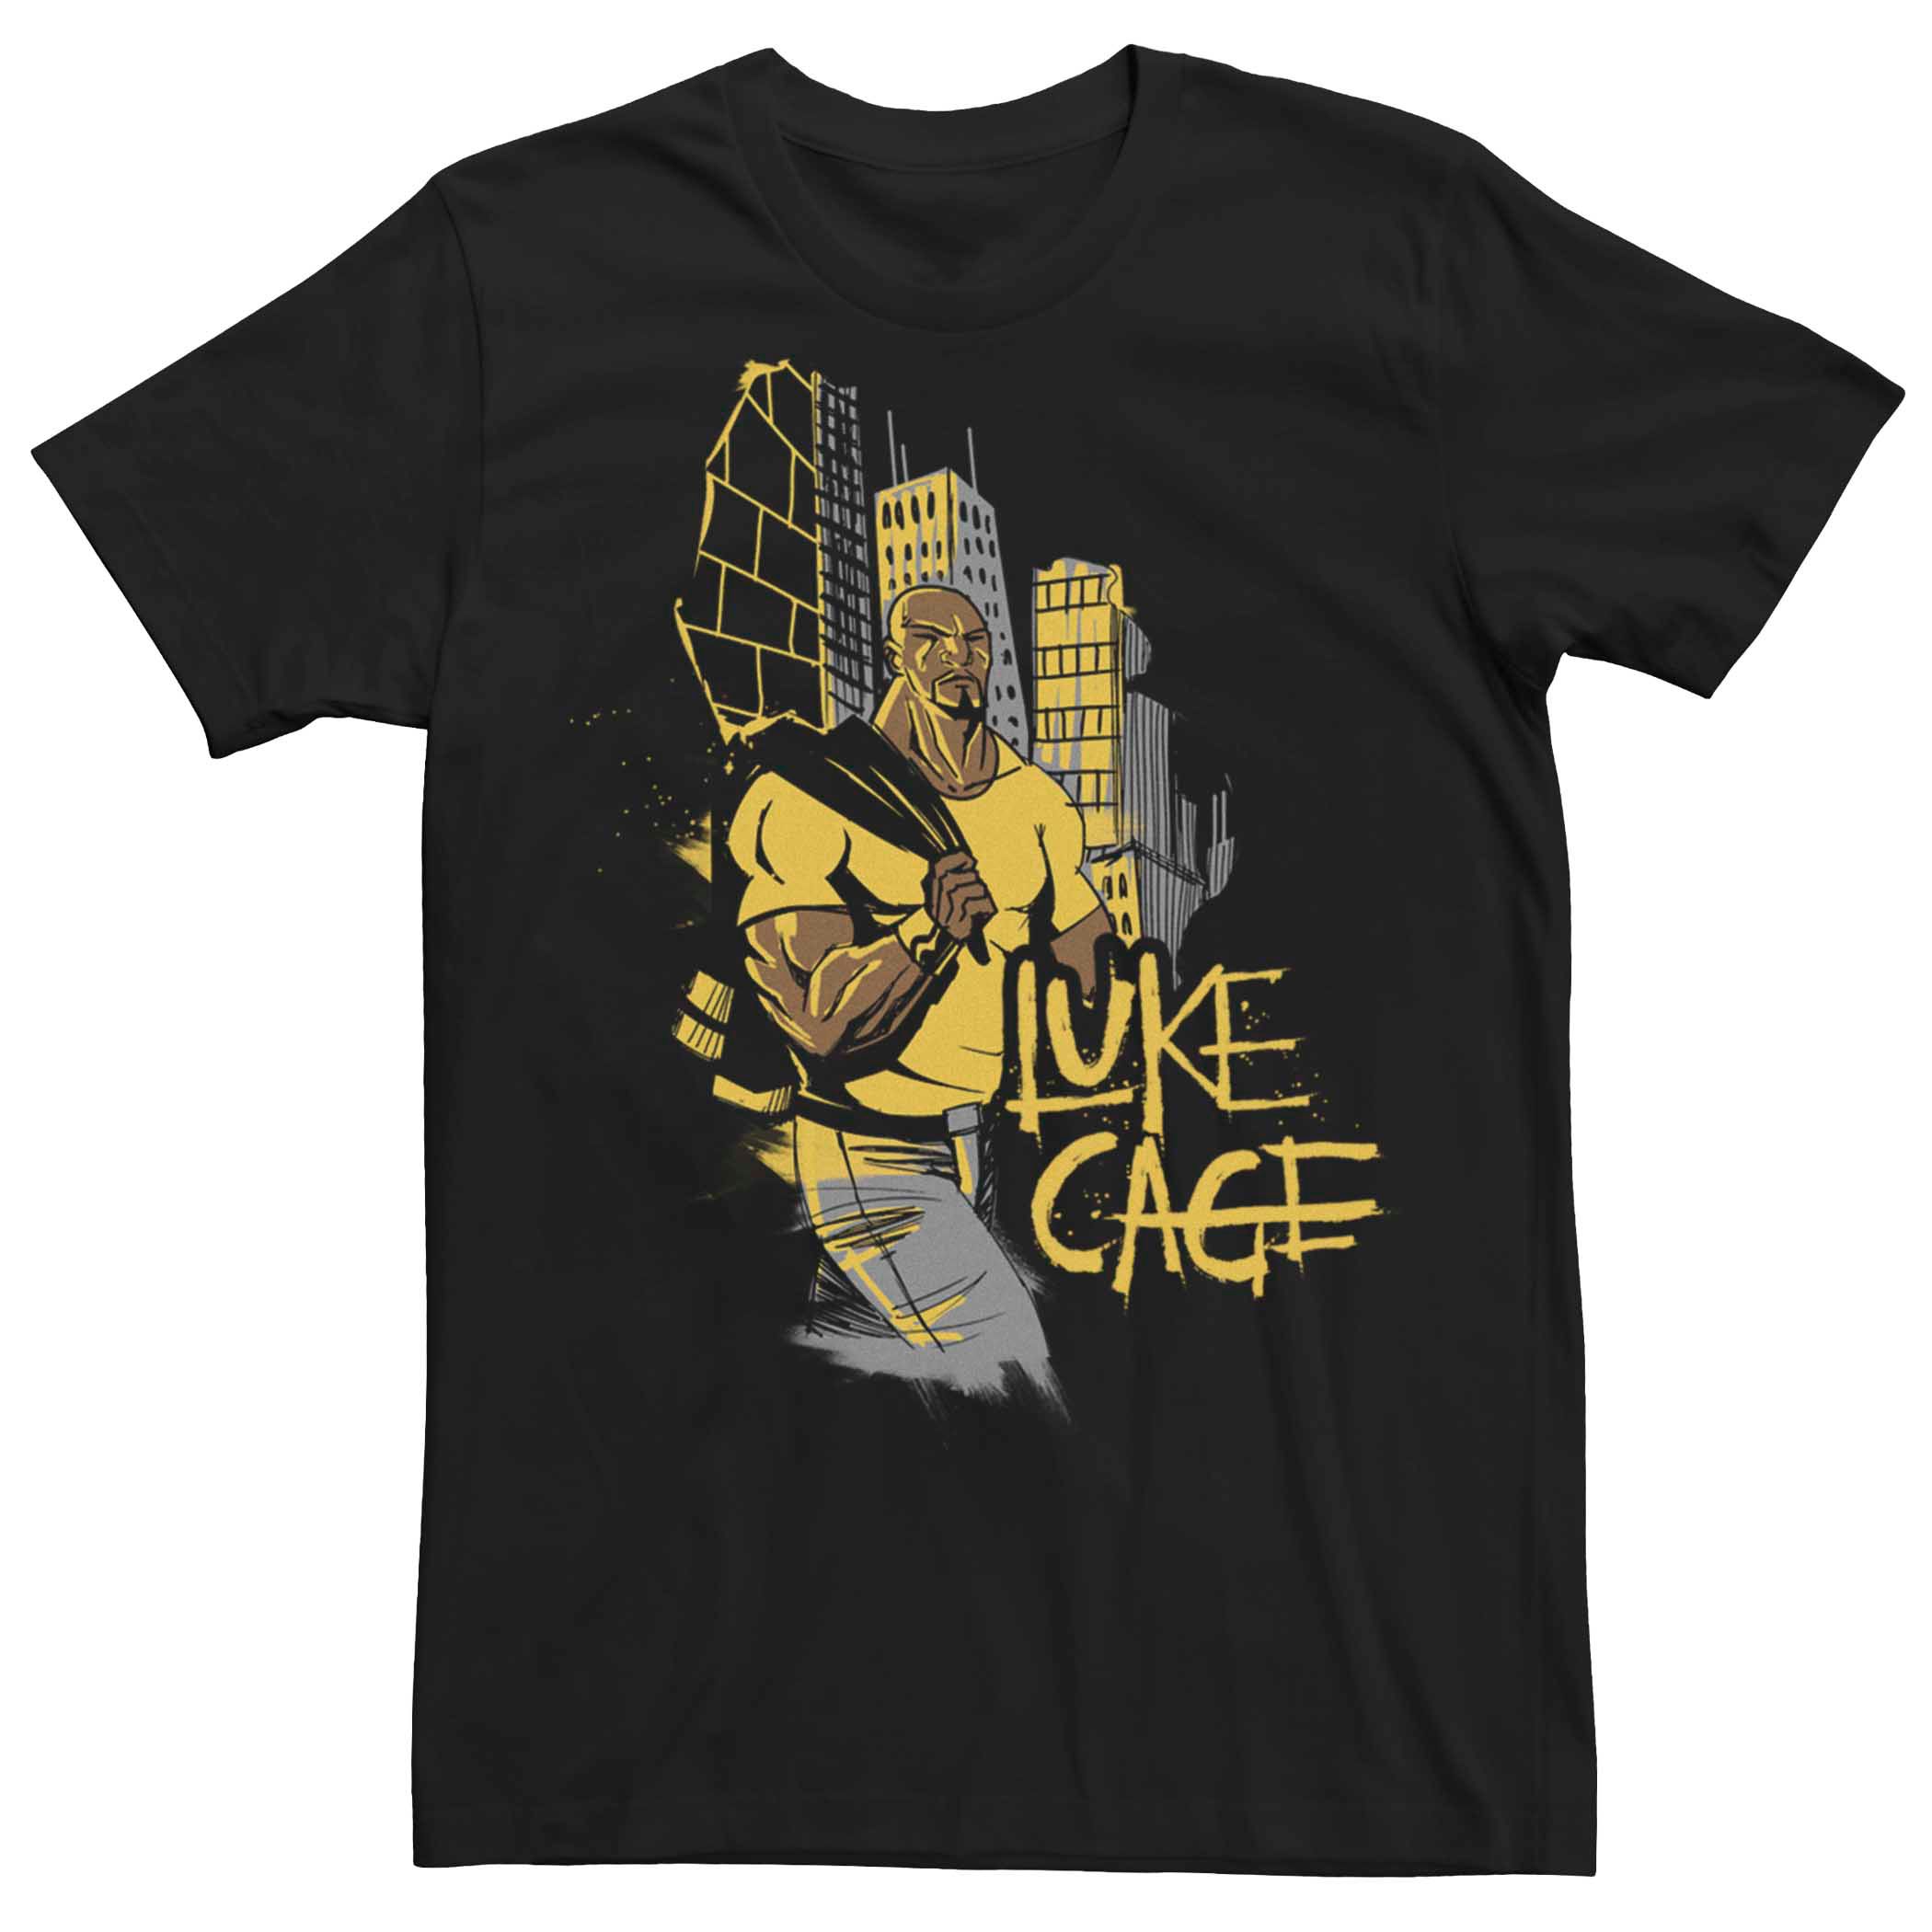 Мужская футболка Marvel Luke Cage Looking Cool Licensed Character walker d luke cage volume 2 caged